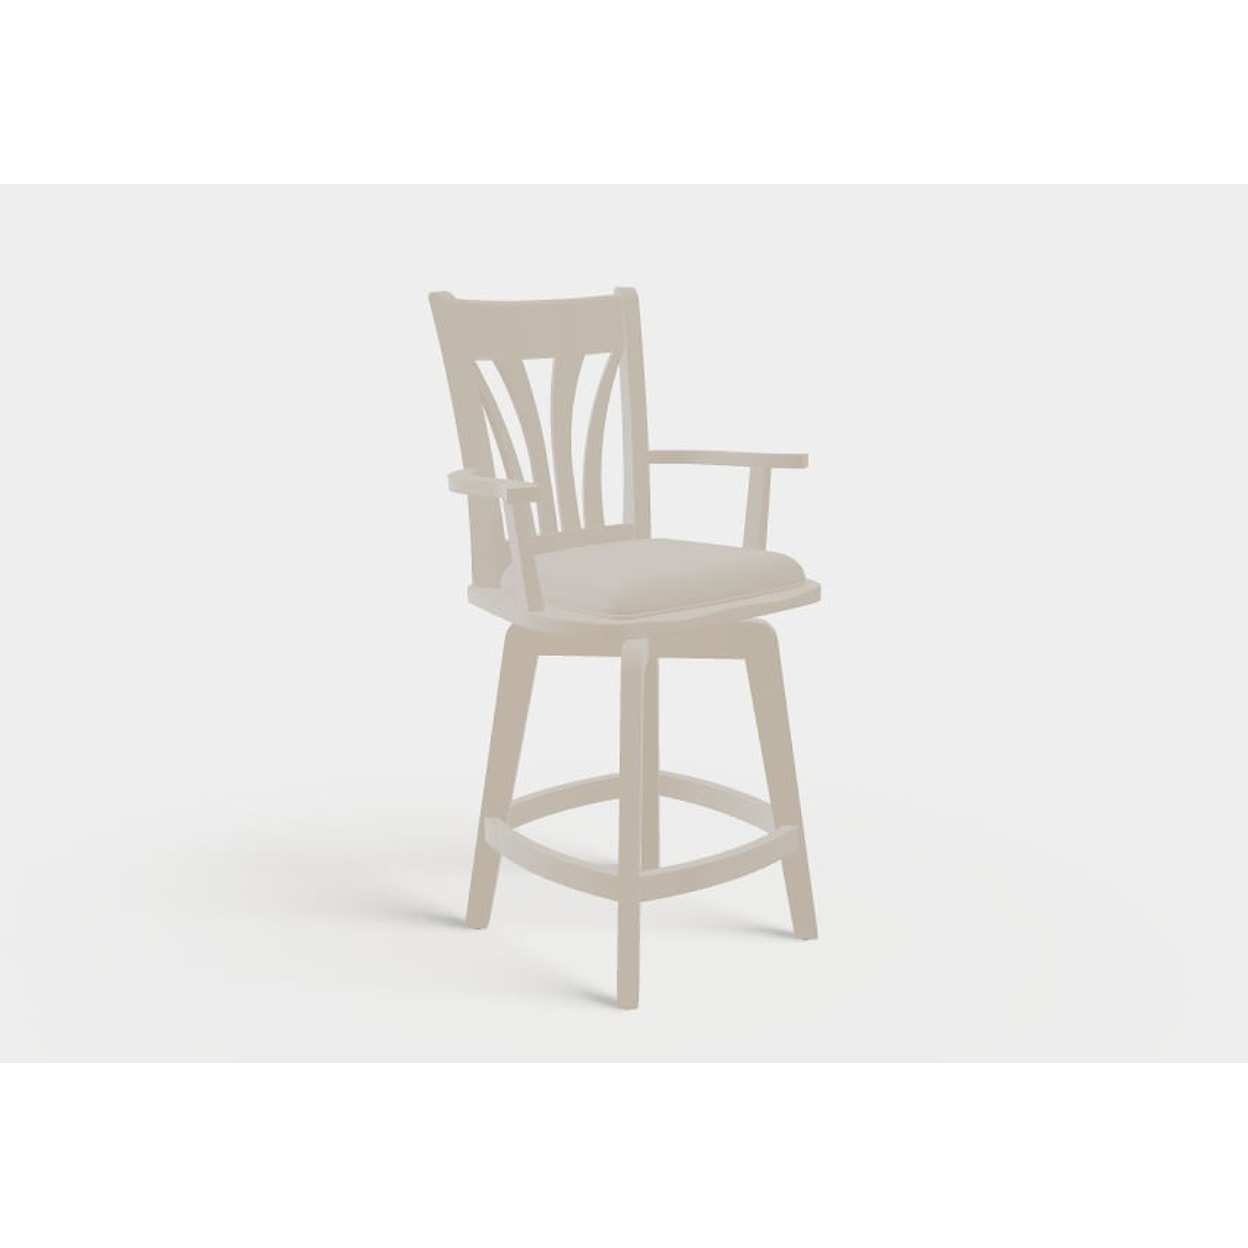 Mavin Hartford  Customizable Hartford Chair/Barstool Line